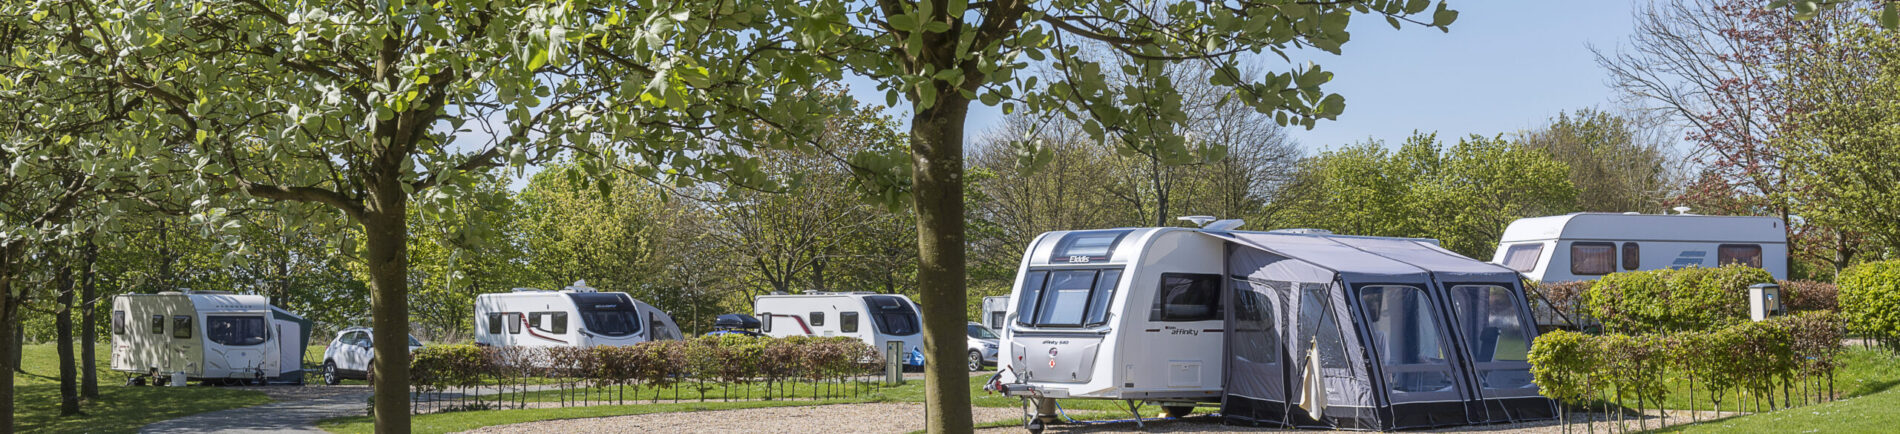 Quiet caravan parks in Yorkshire – St Helens near Scarborough